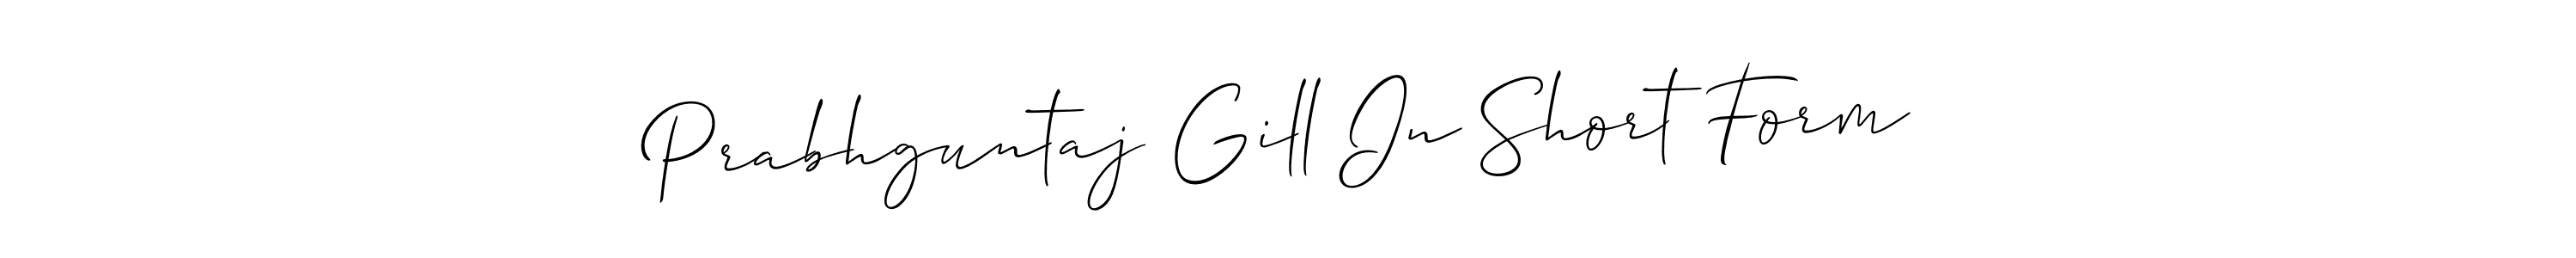 How to make Prabhguntaj Gill In Short Form signature? Allison_Script is a professional autograph style. Create handwritten signature for Prabhguntaj Gill In Short Form name. Prabhguntaj Gill In Short Form signature style 2 images and pictures png